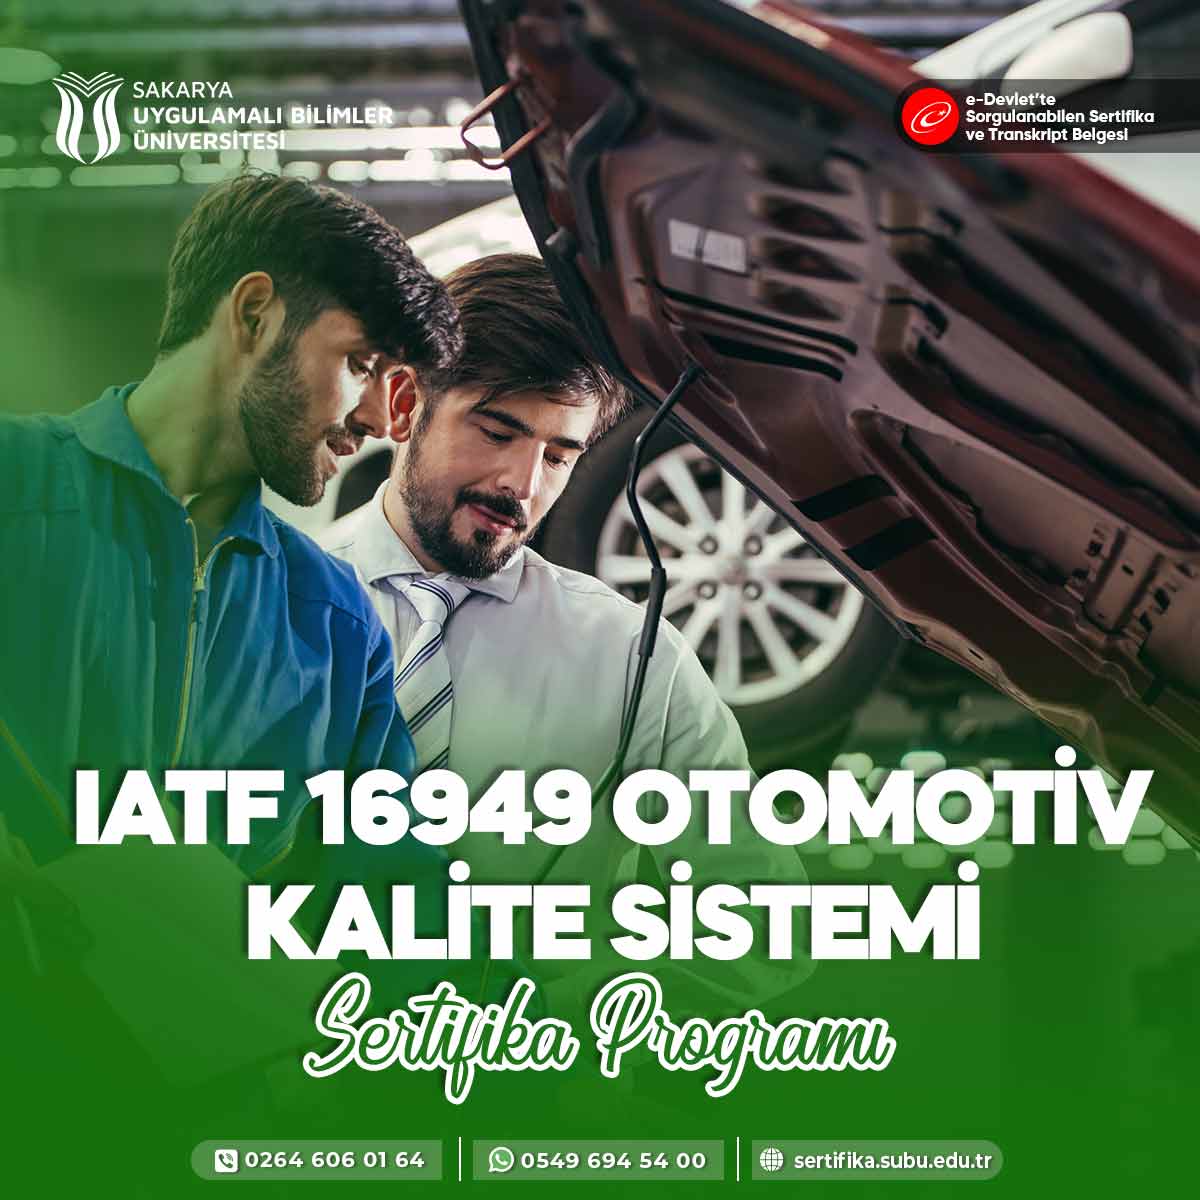 IATF 16949 Otomotiv Kalite Sistemi Sertifikası